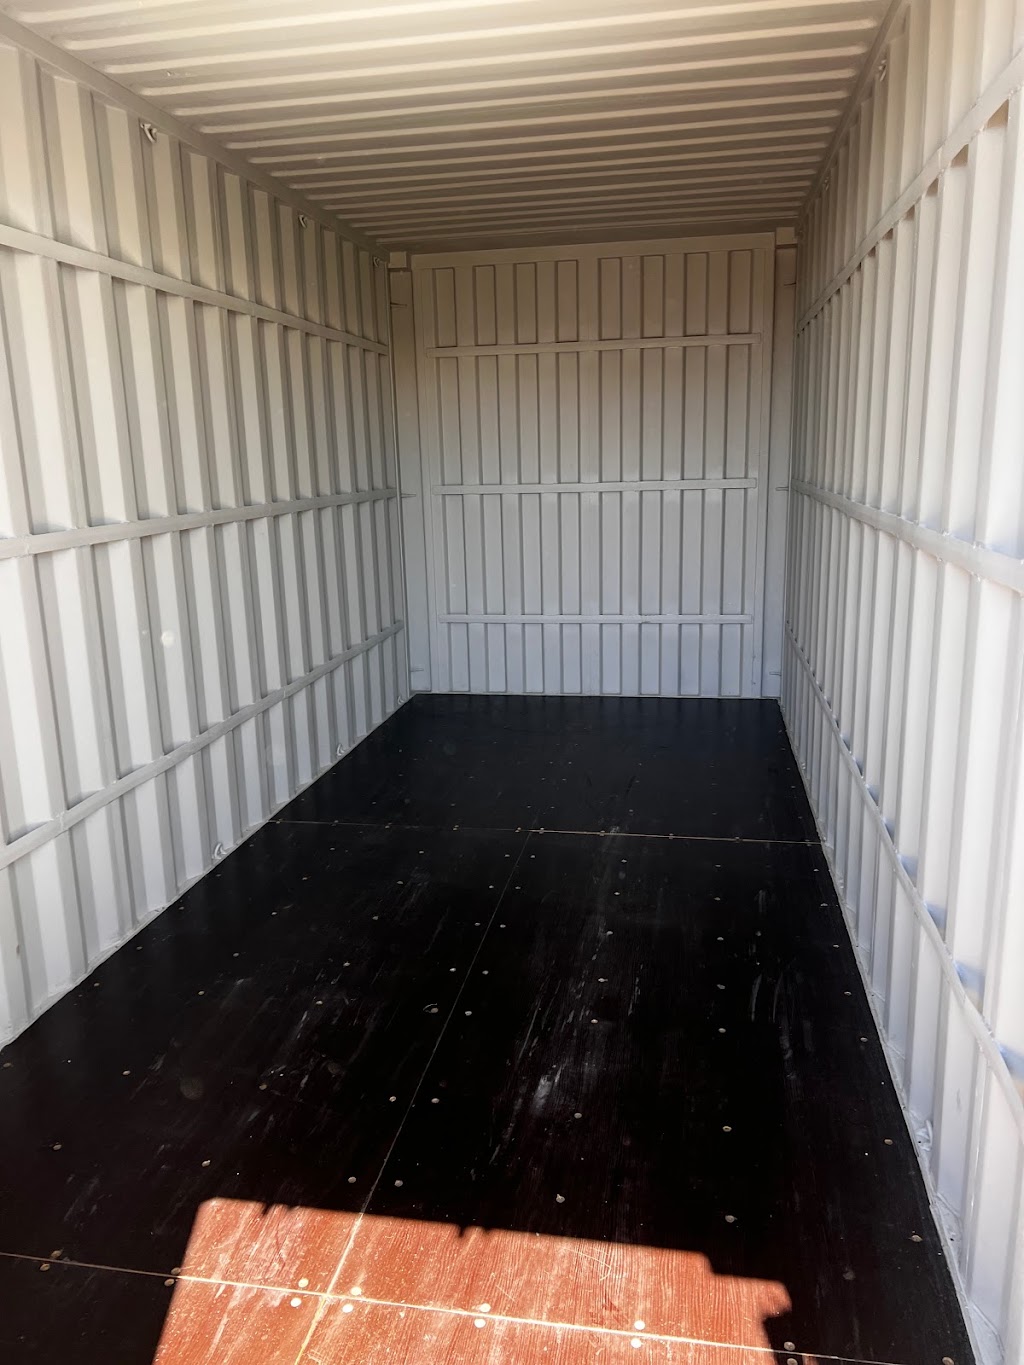 TITAN Containers Self Storage Adelaide | storage | 1148-1156 Port Wakefield Rd, Burton SA 5110, Australia | 1300484826 OR +61 1300 484 826